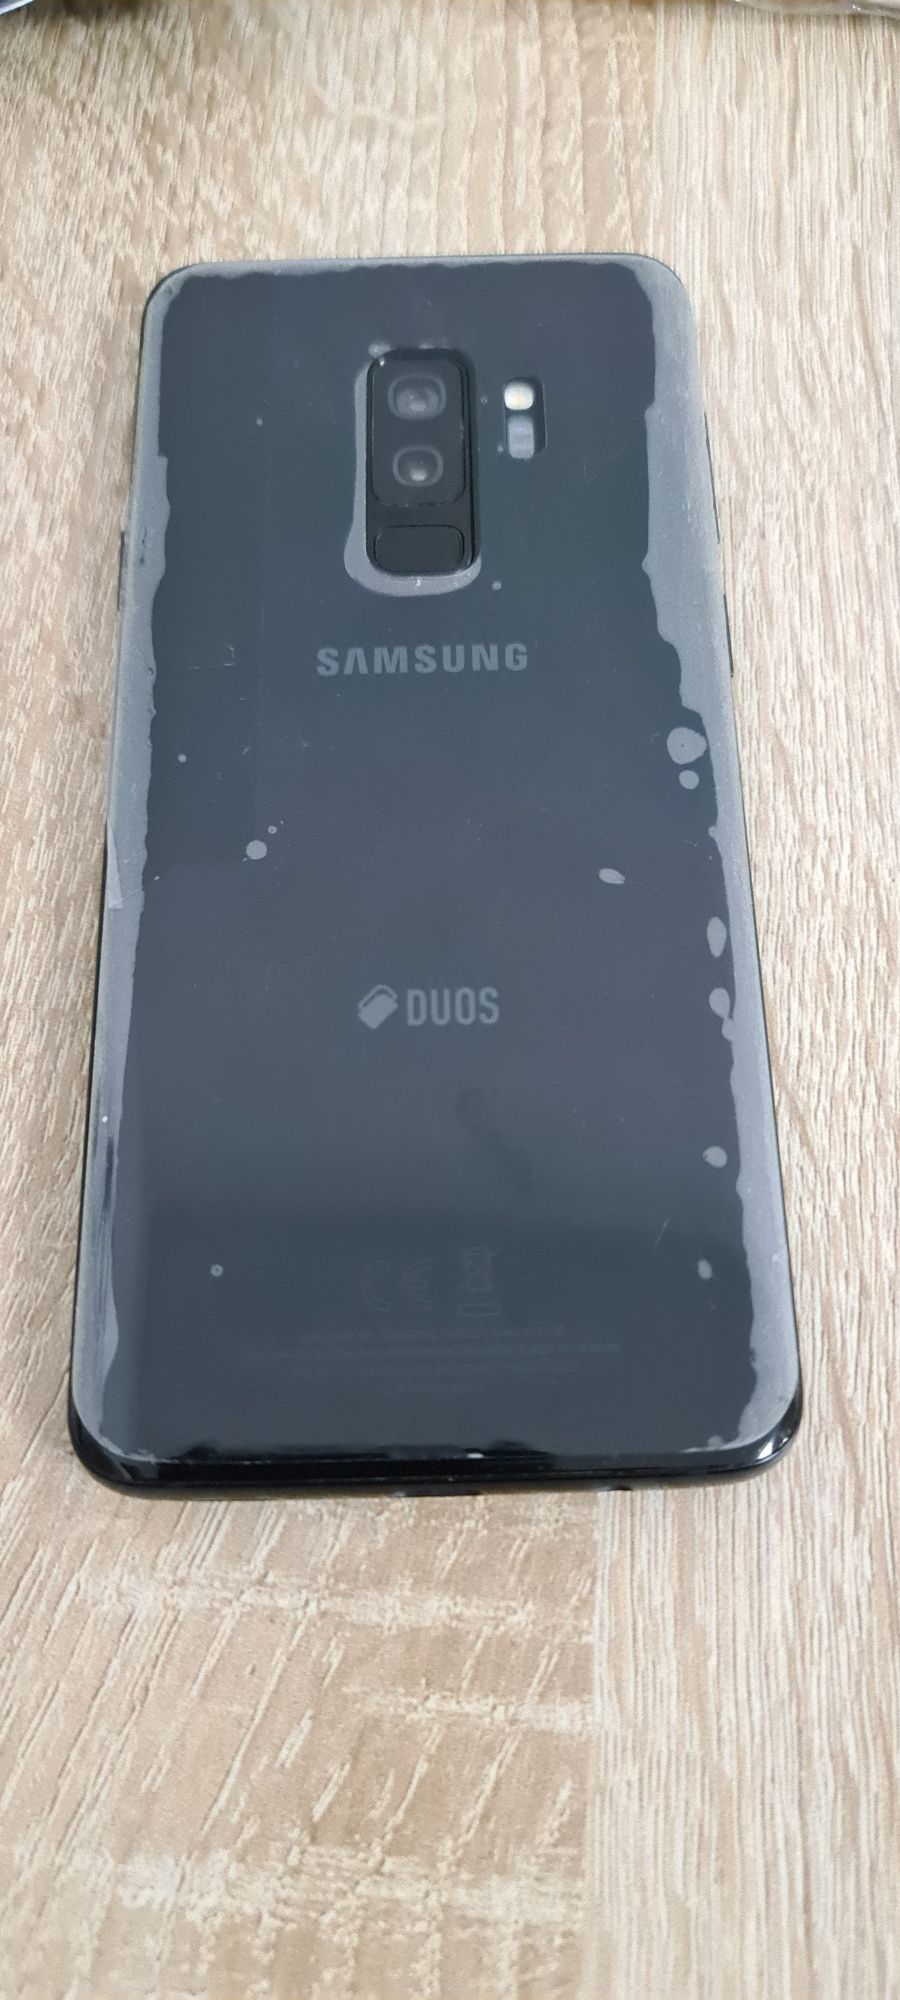 Samsung Galaxy S 9 plus Black